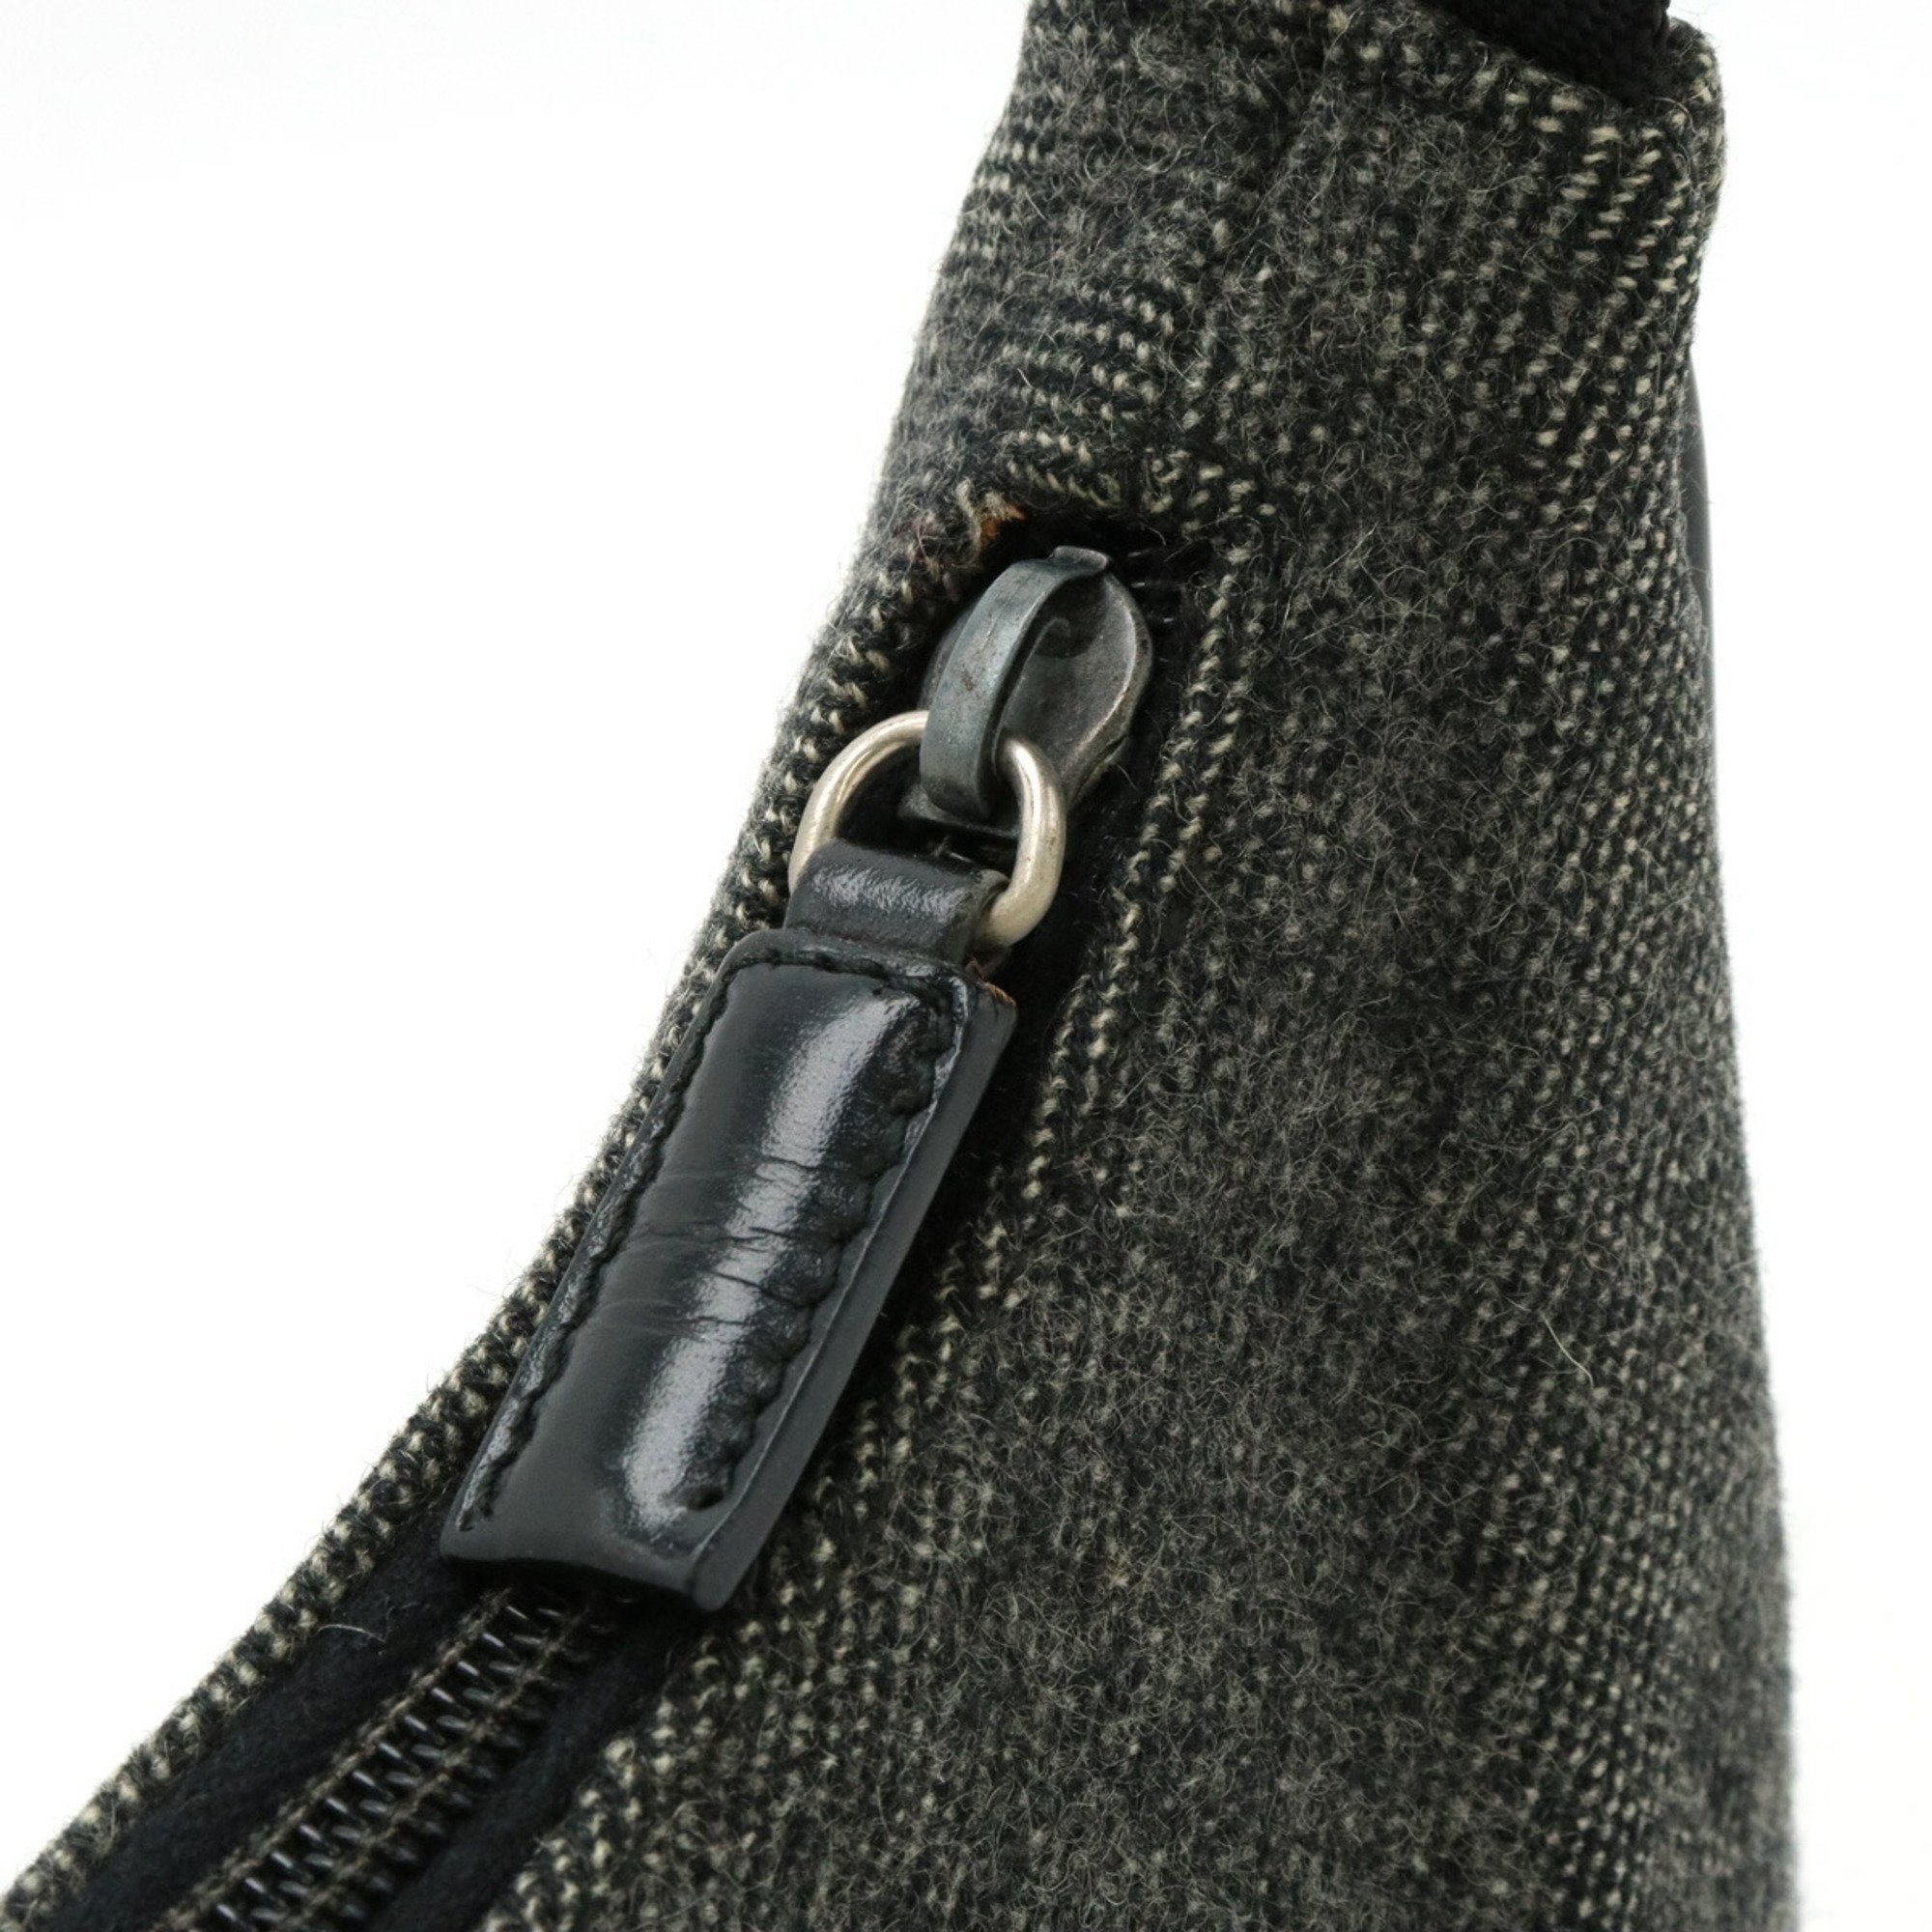 PRADA Prada Sport Pouch Handbag Wool Nylon Dark Grey Black MV515